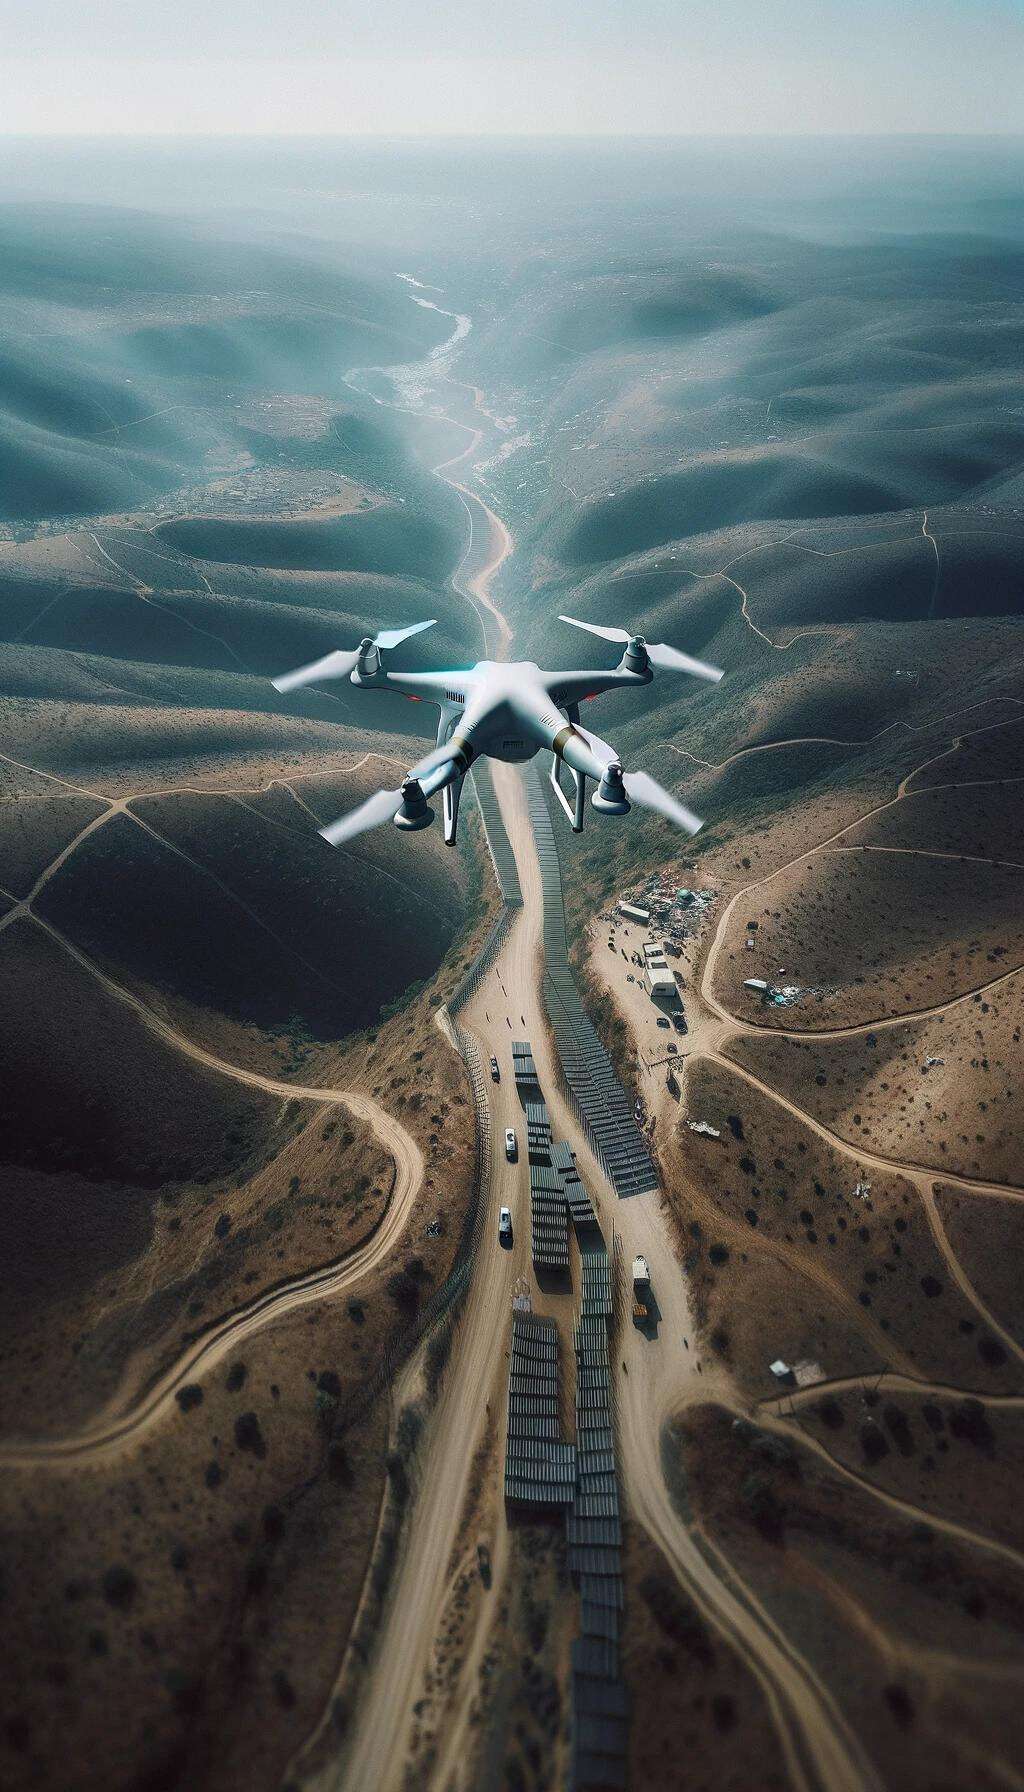 border security using thermal UAV Gimbal Drone camera